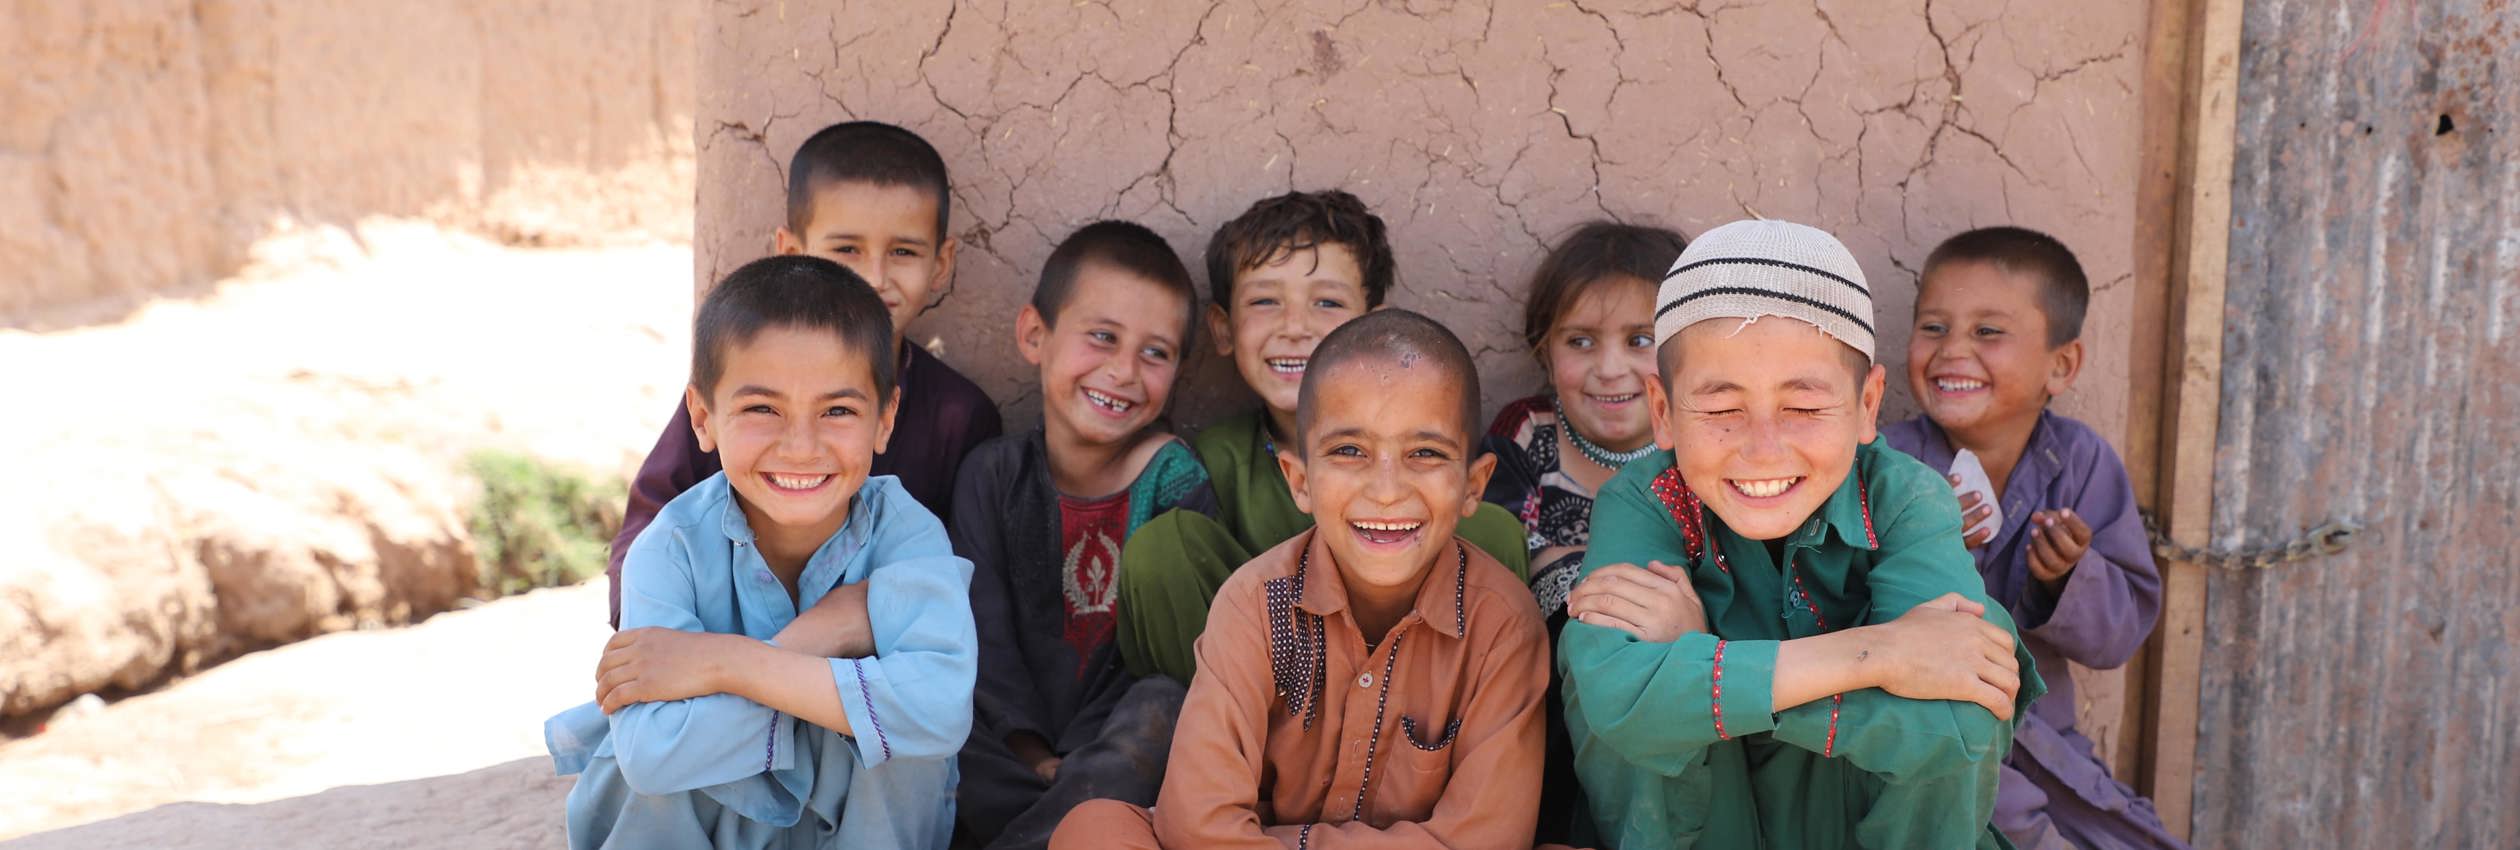 Pakistan_Afghan-Refugee-Children-In-Islamabad